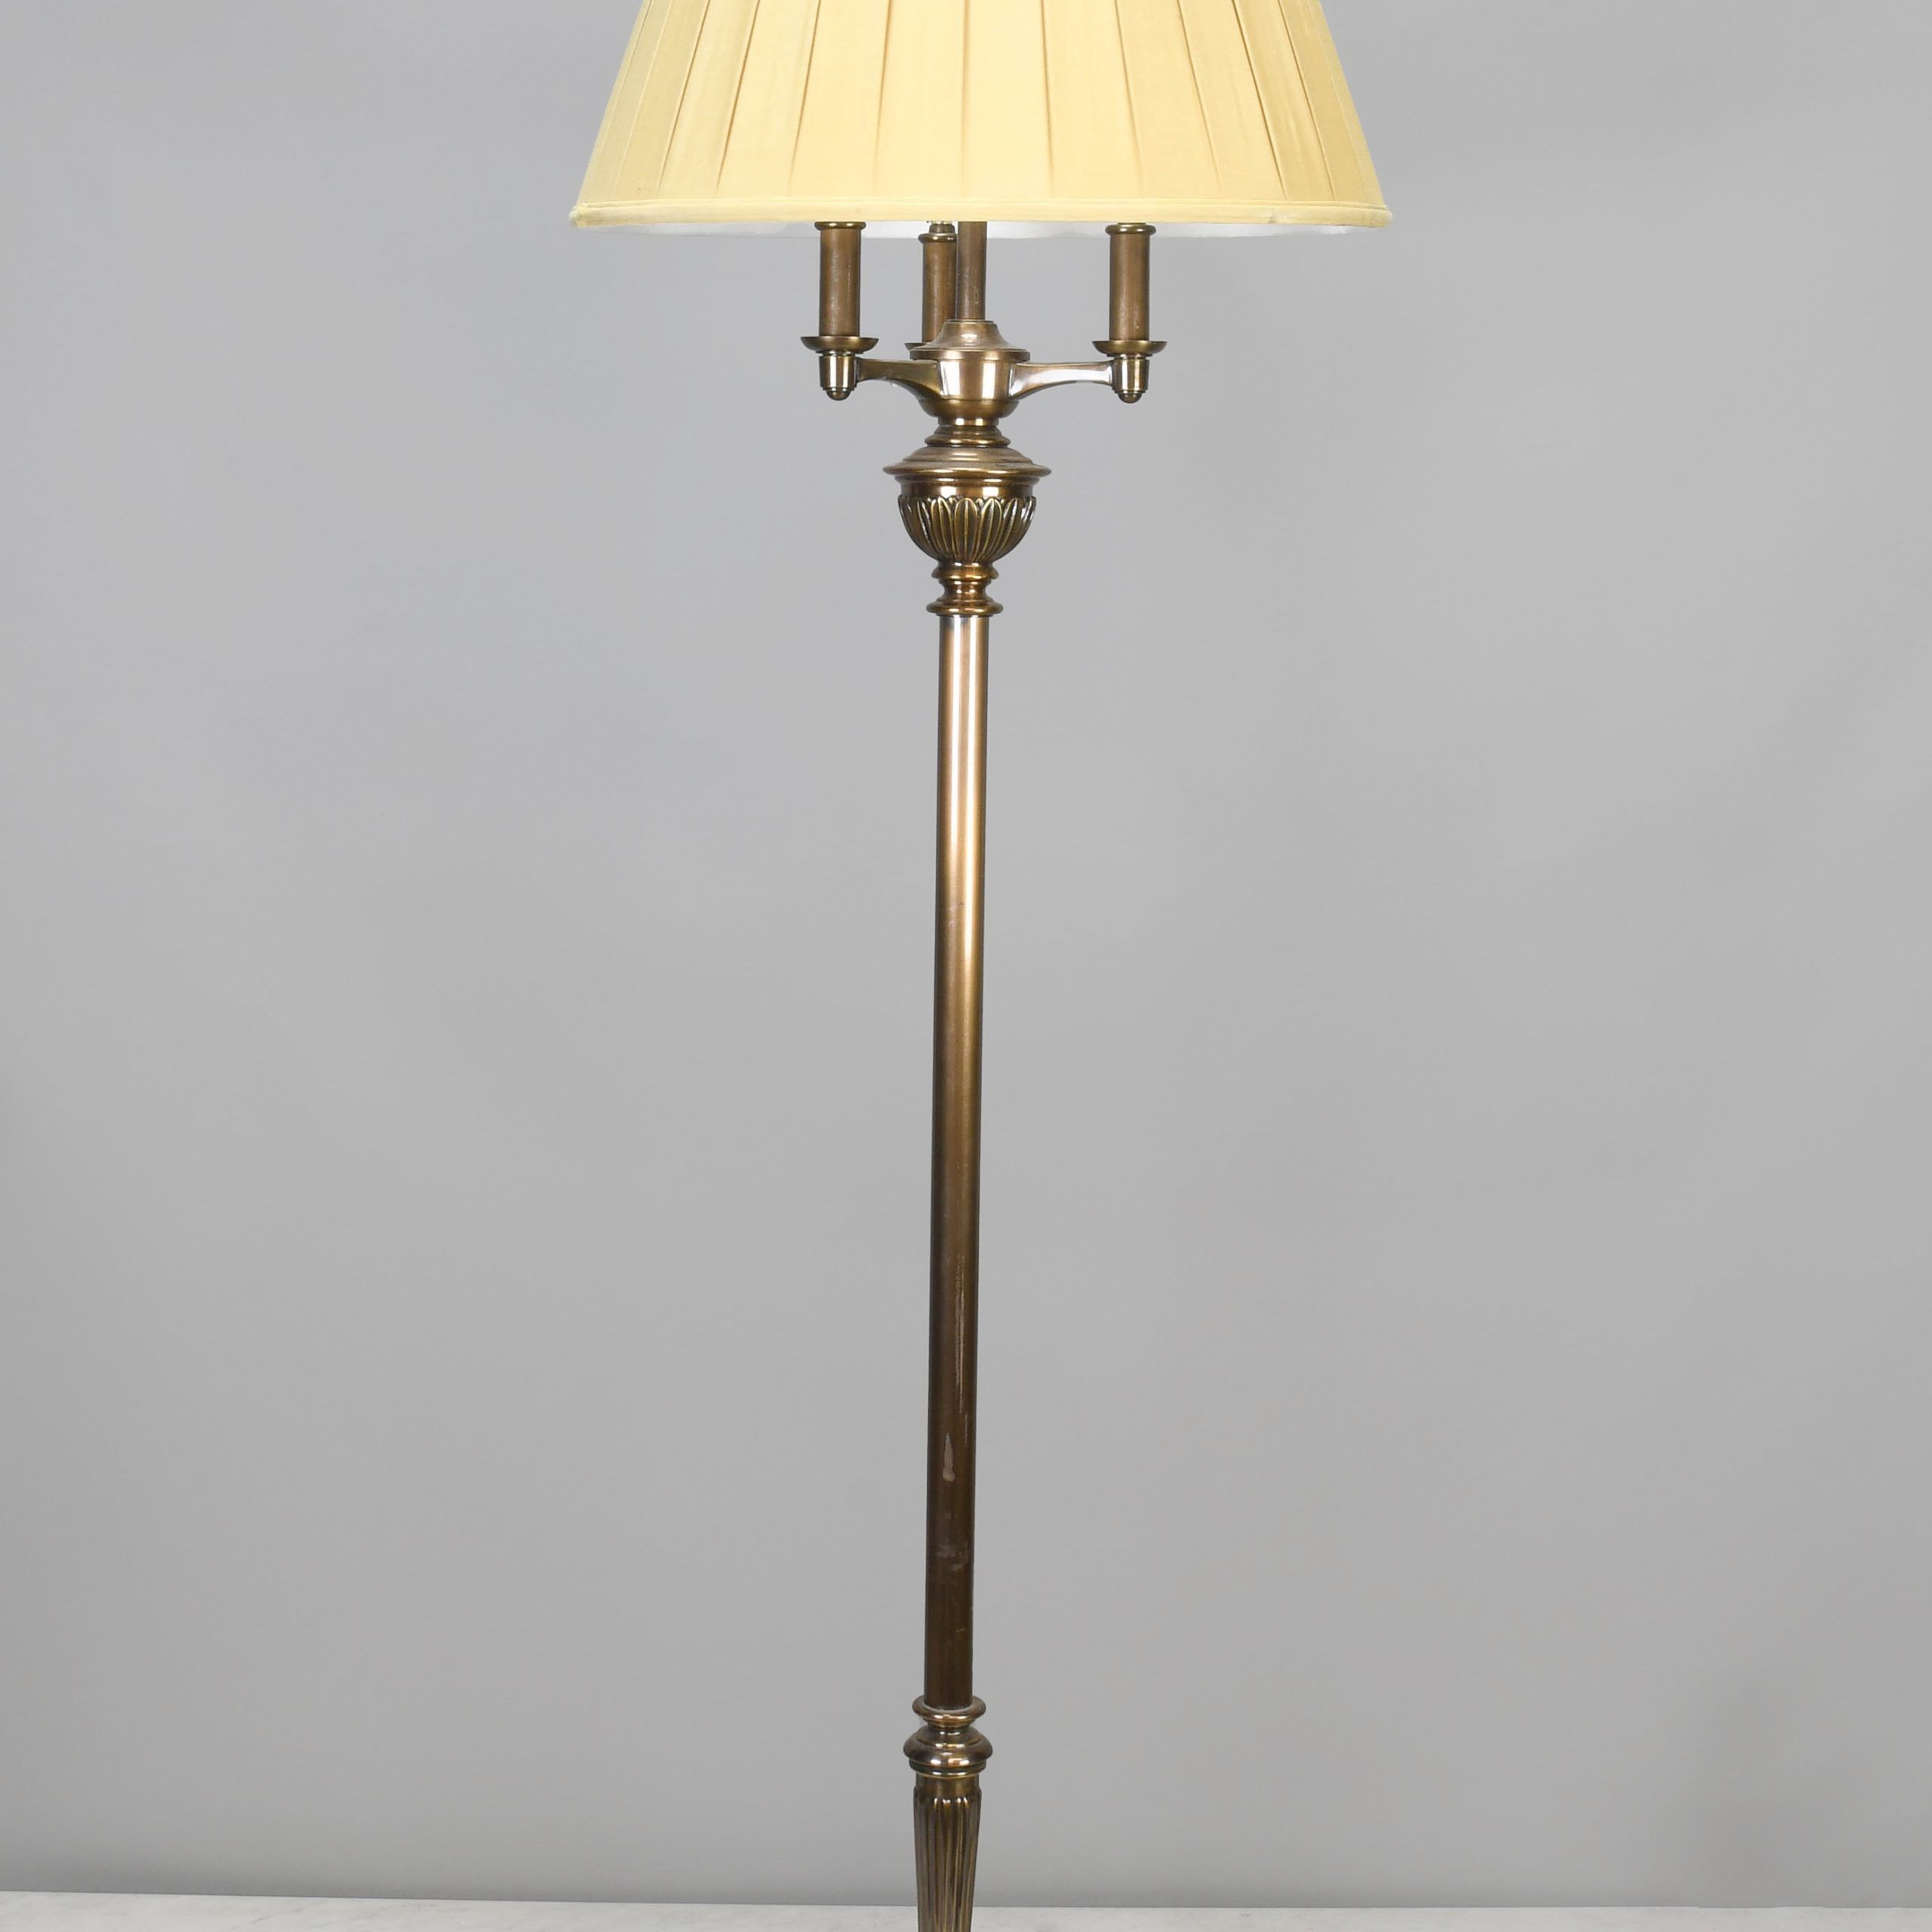 Three Candle Antique Brass Floor Lamp | Floor Lamps | Collection | City  Knickerbocker | Lighting Rentals Throughout Antique Brass Floor Lamps (View 8 of 20)